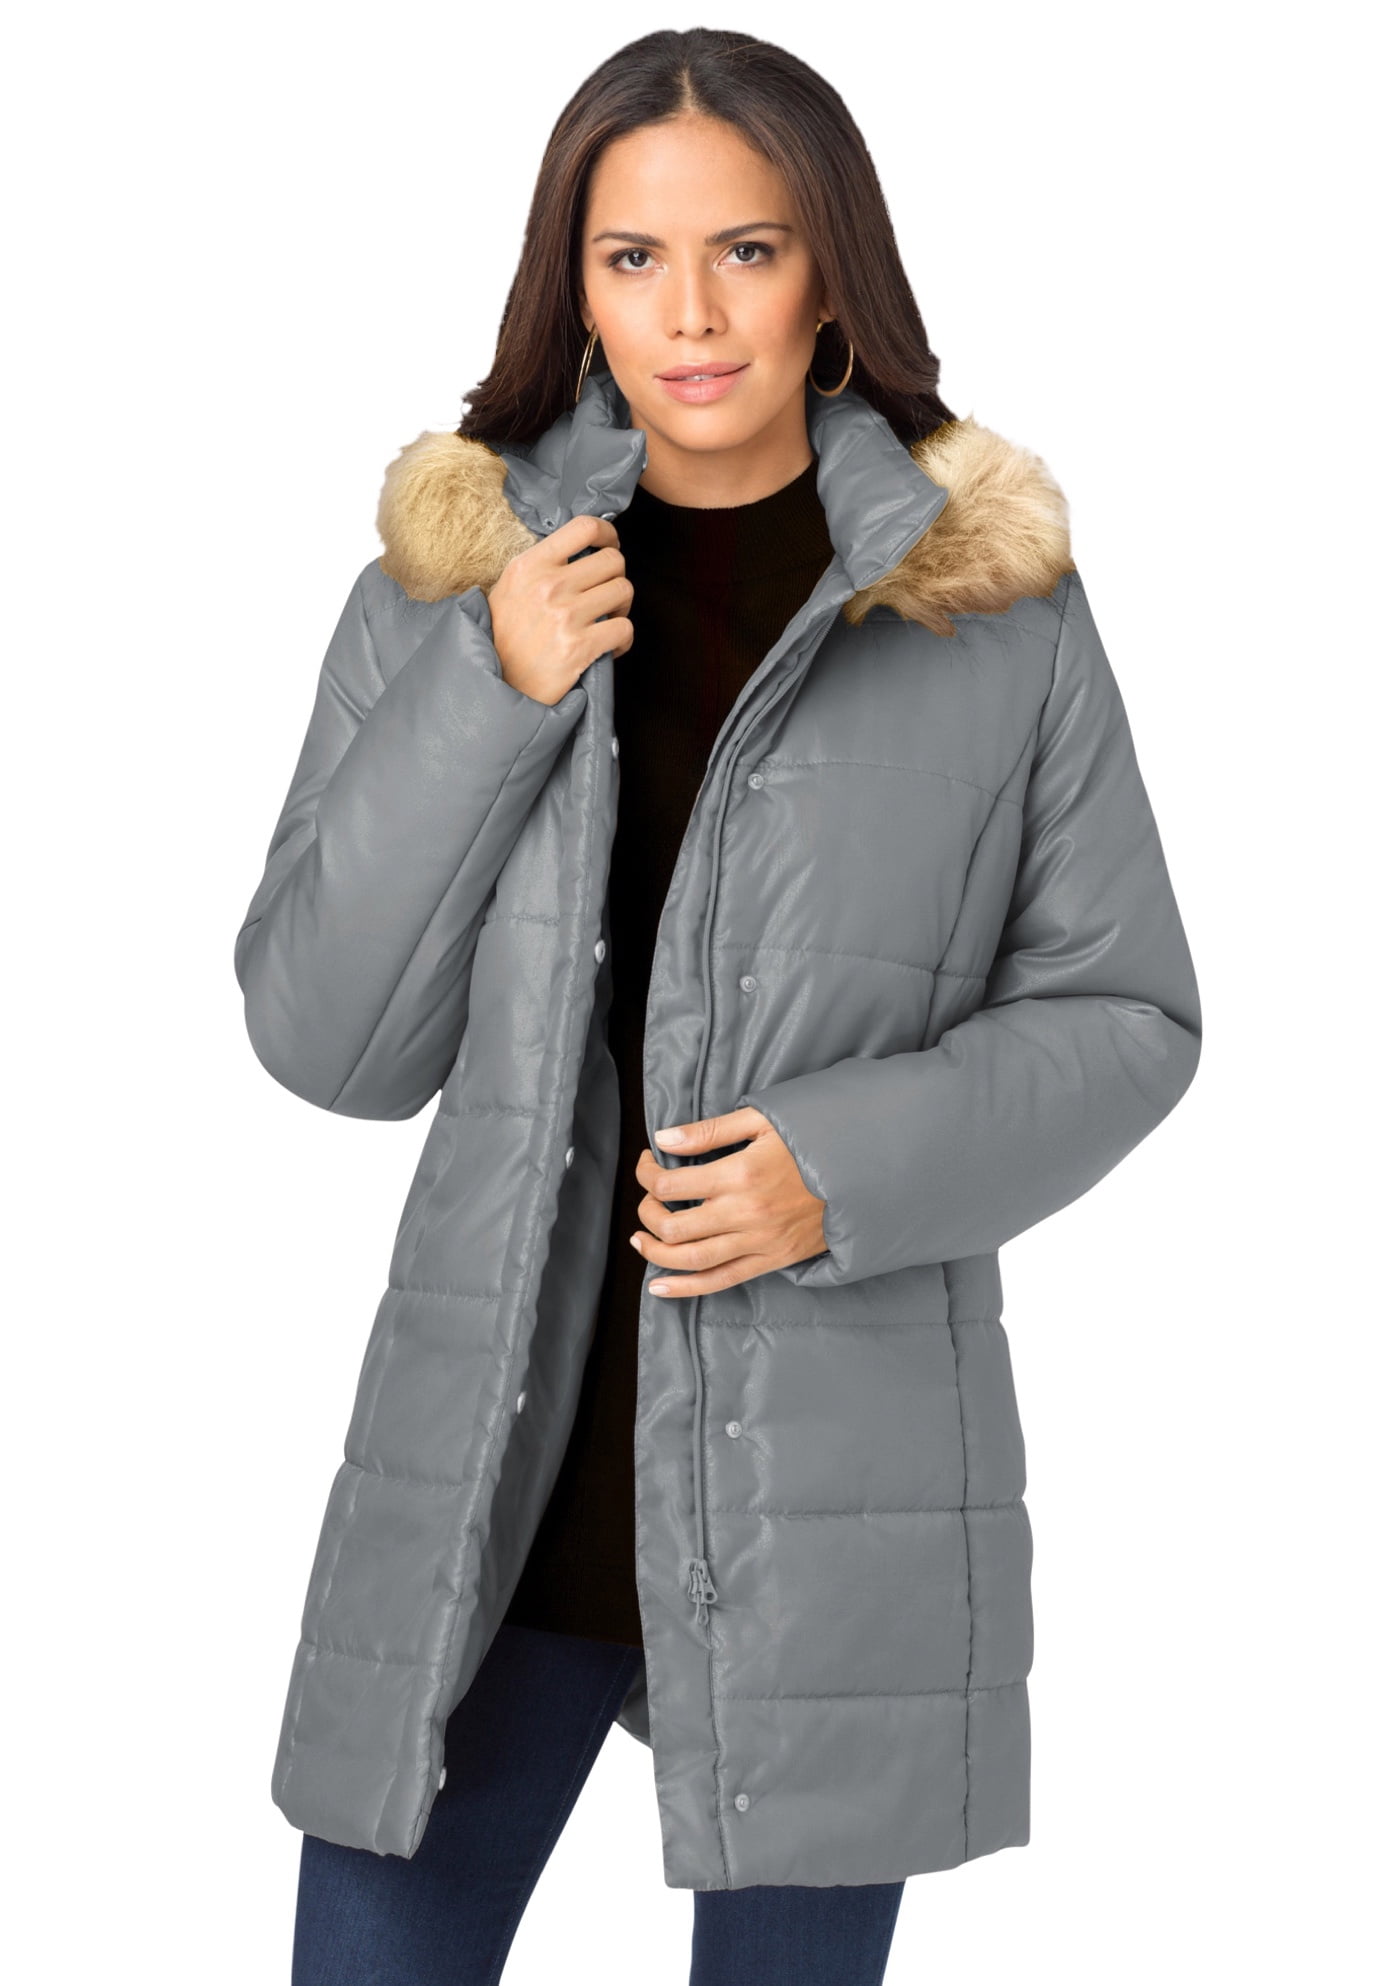 30First Winter Coat for Women Windproof Puffer Down Jacket 